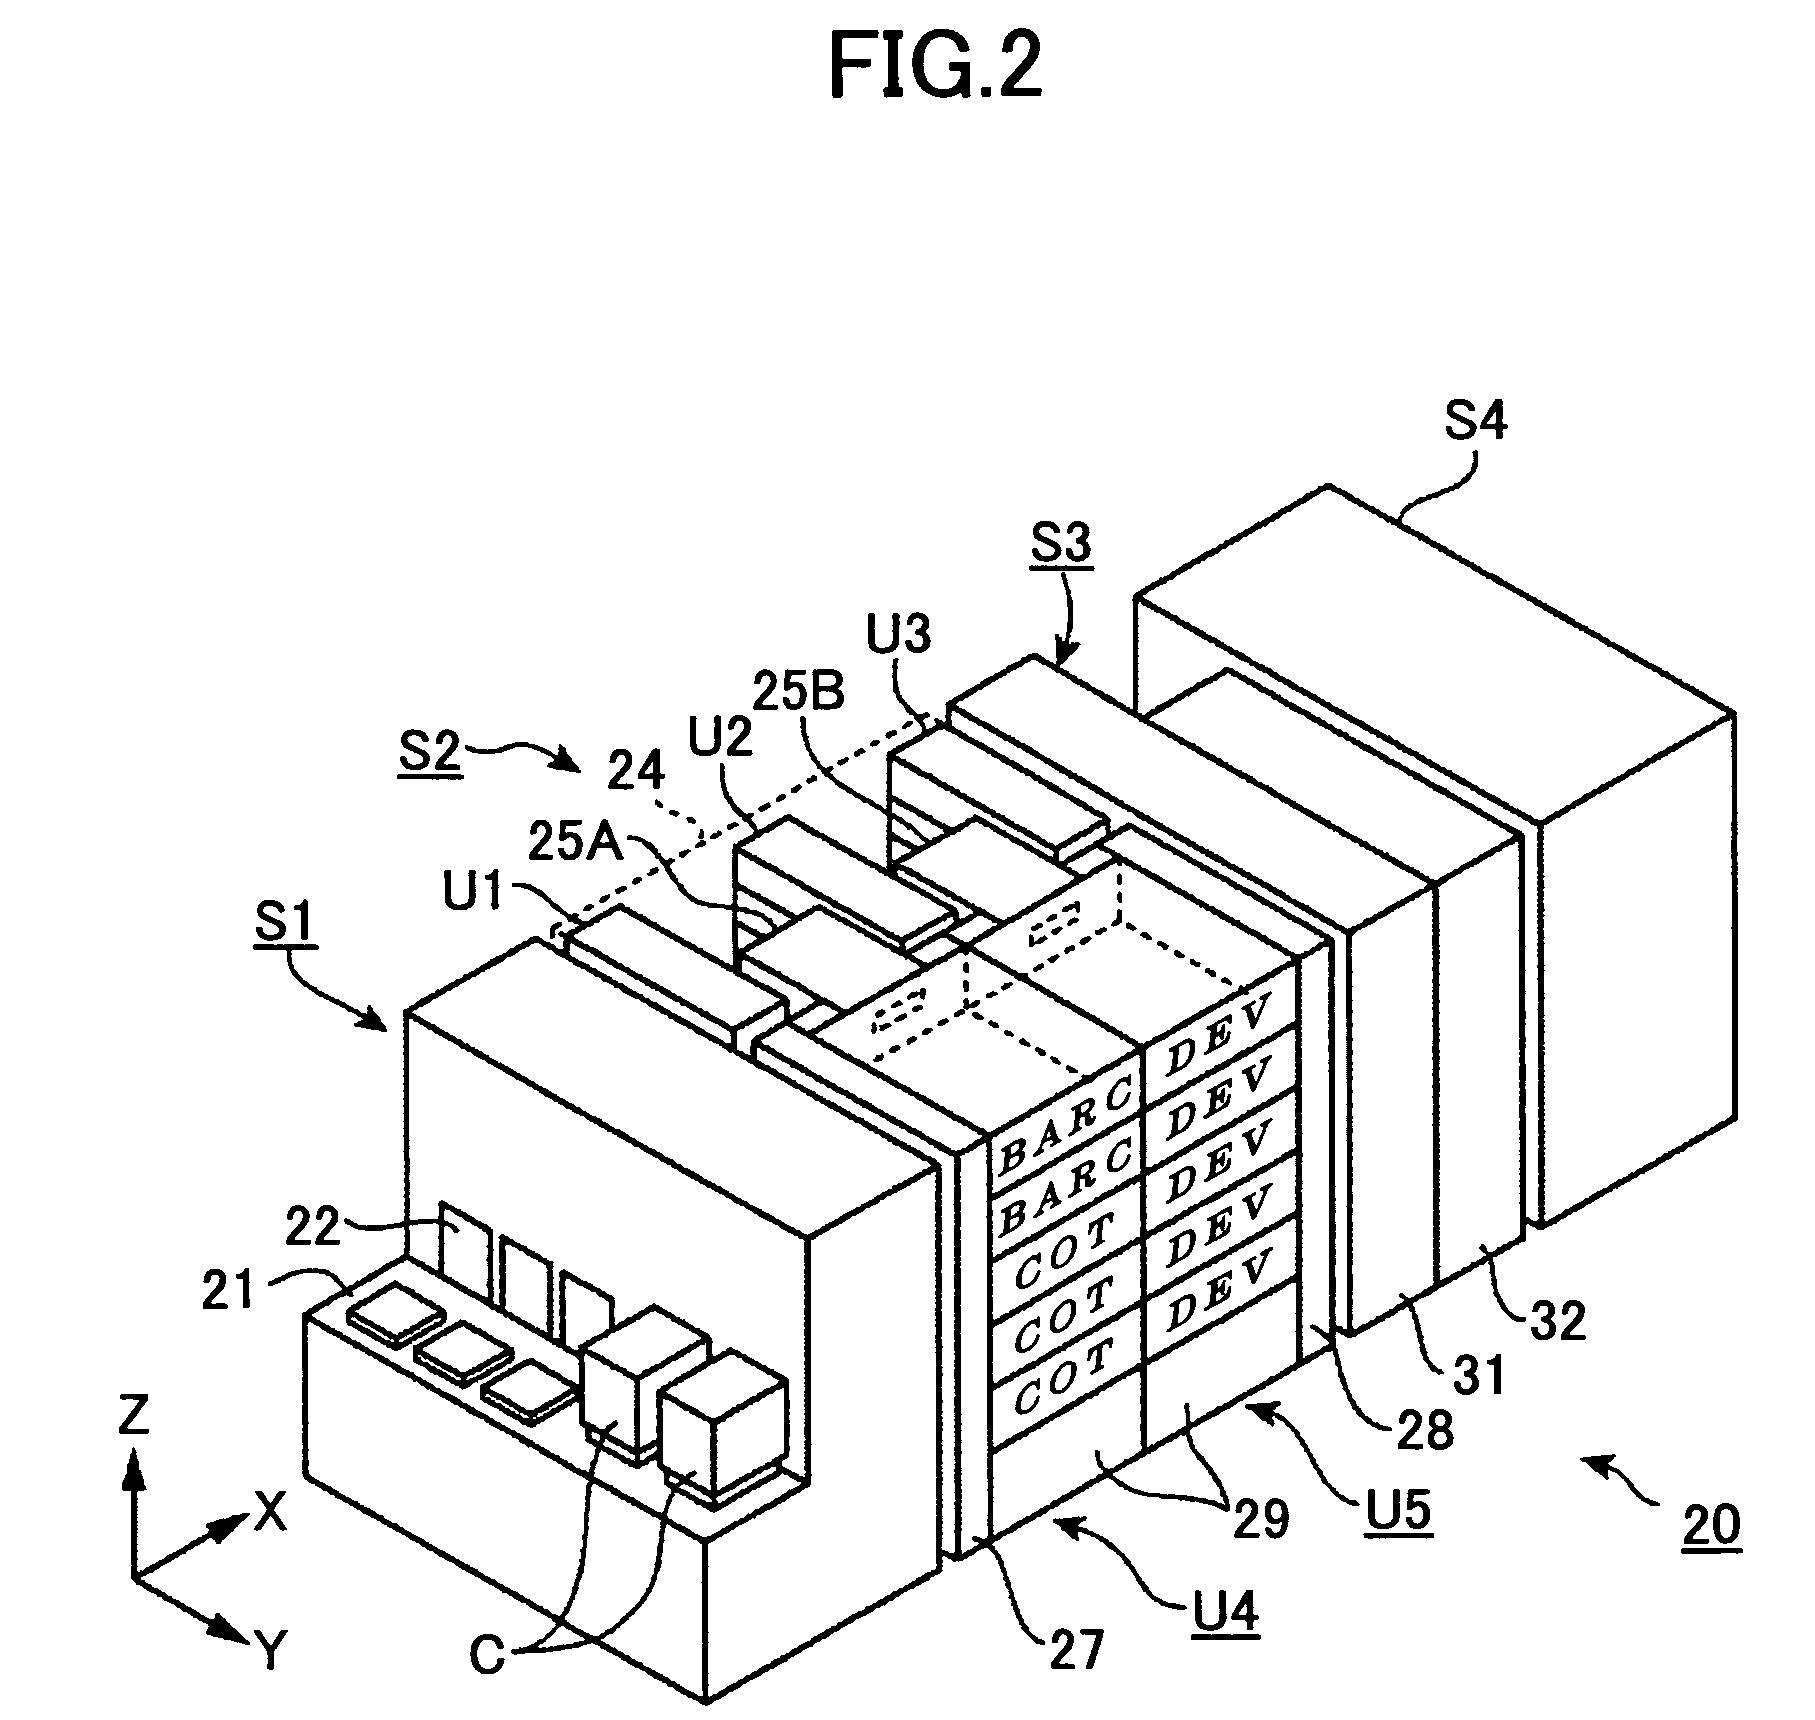 Heating apparatus, heating method, and computer readable storage medium